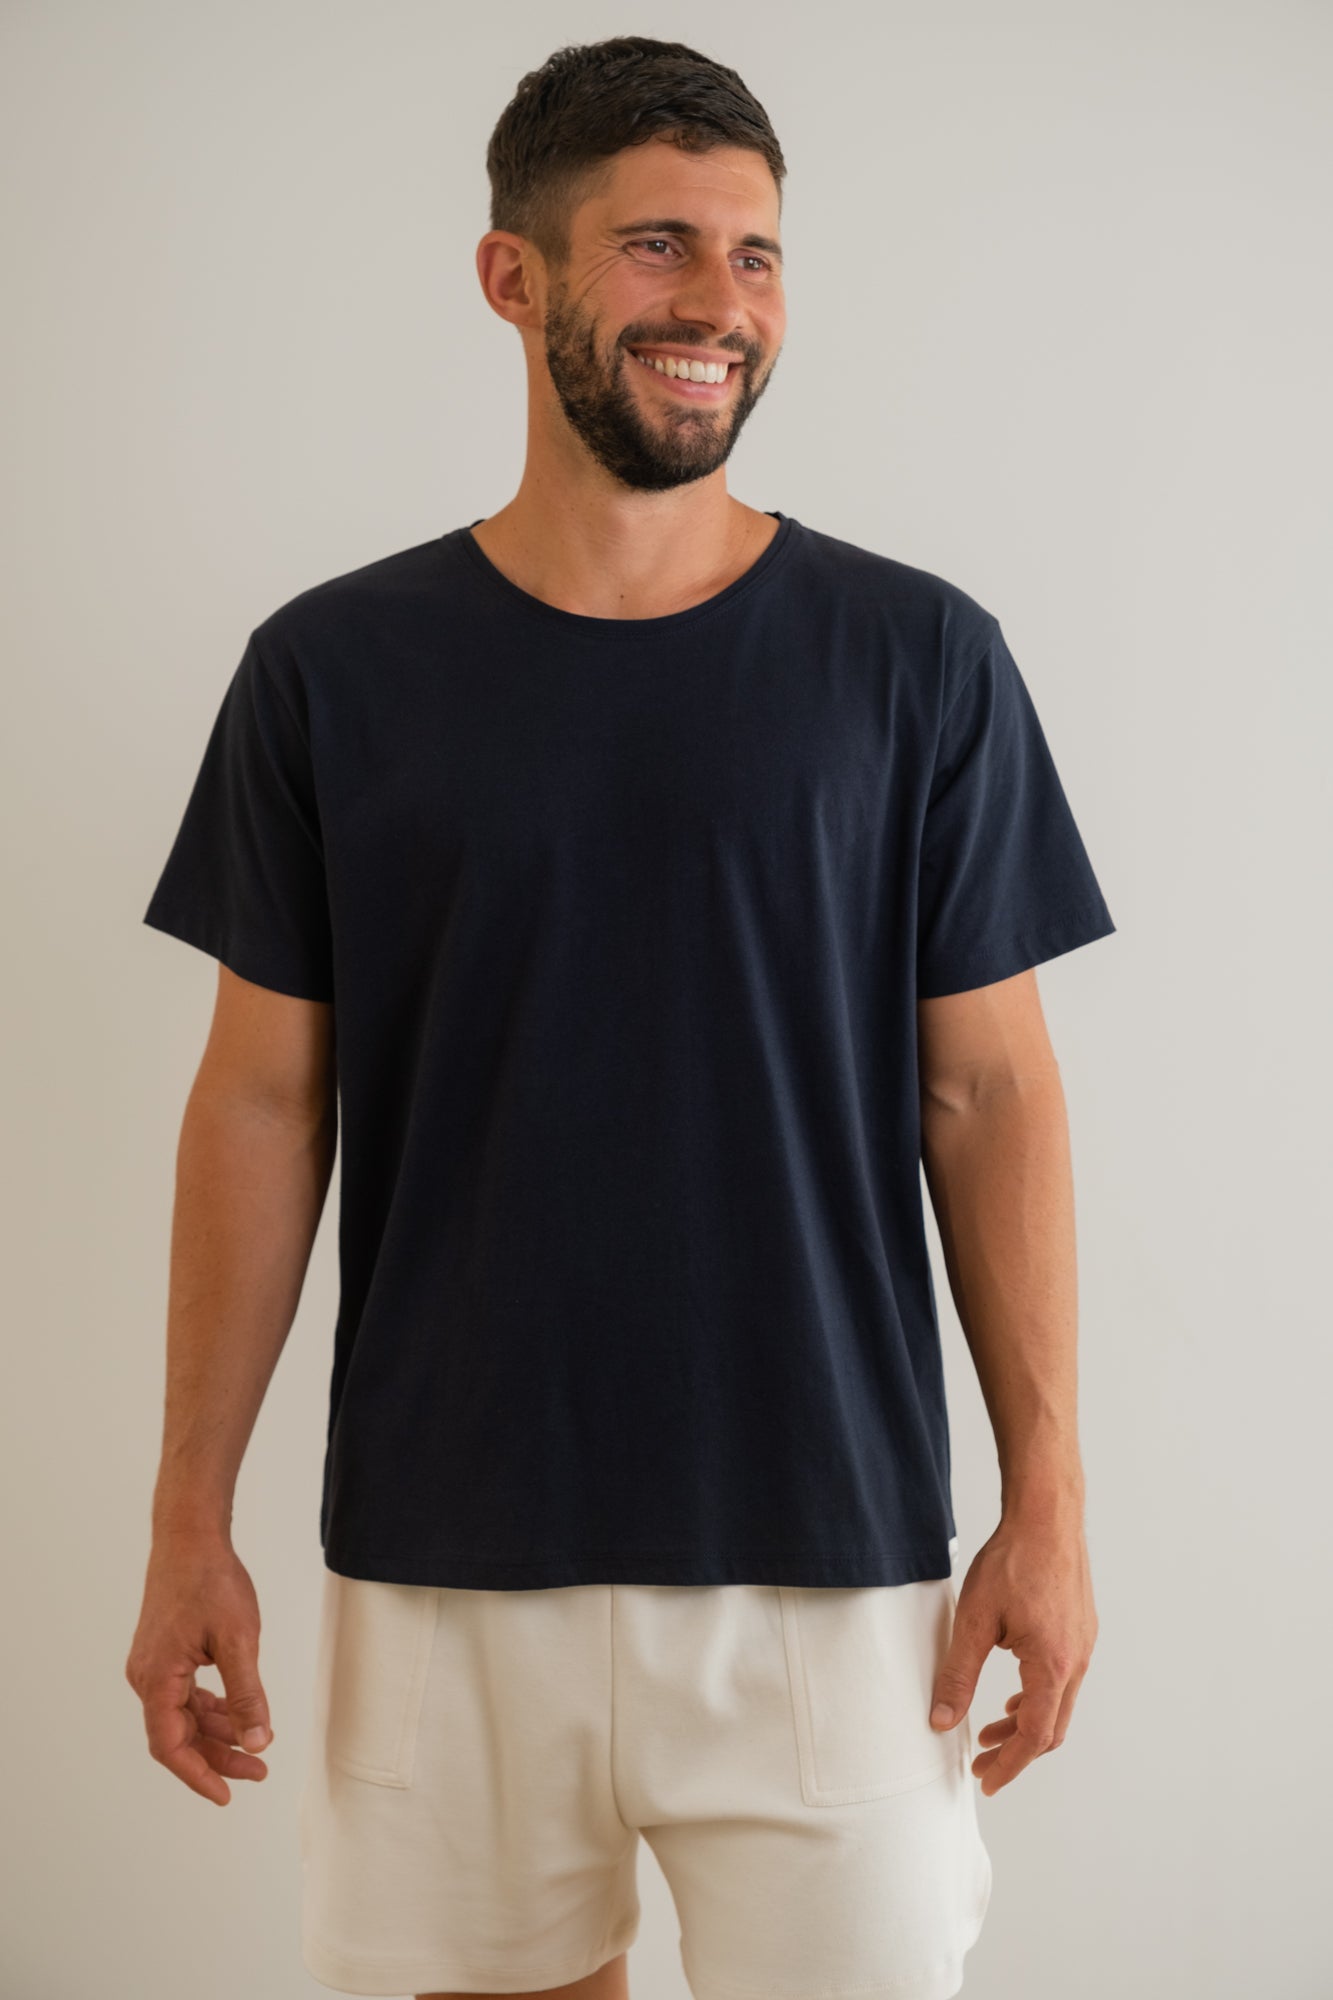 MIA Moda Regenerativa Camisetas S Camiseta Esencial hombre - azul